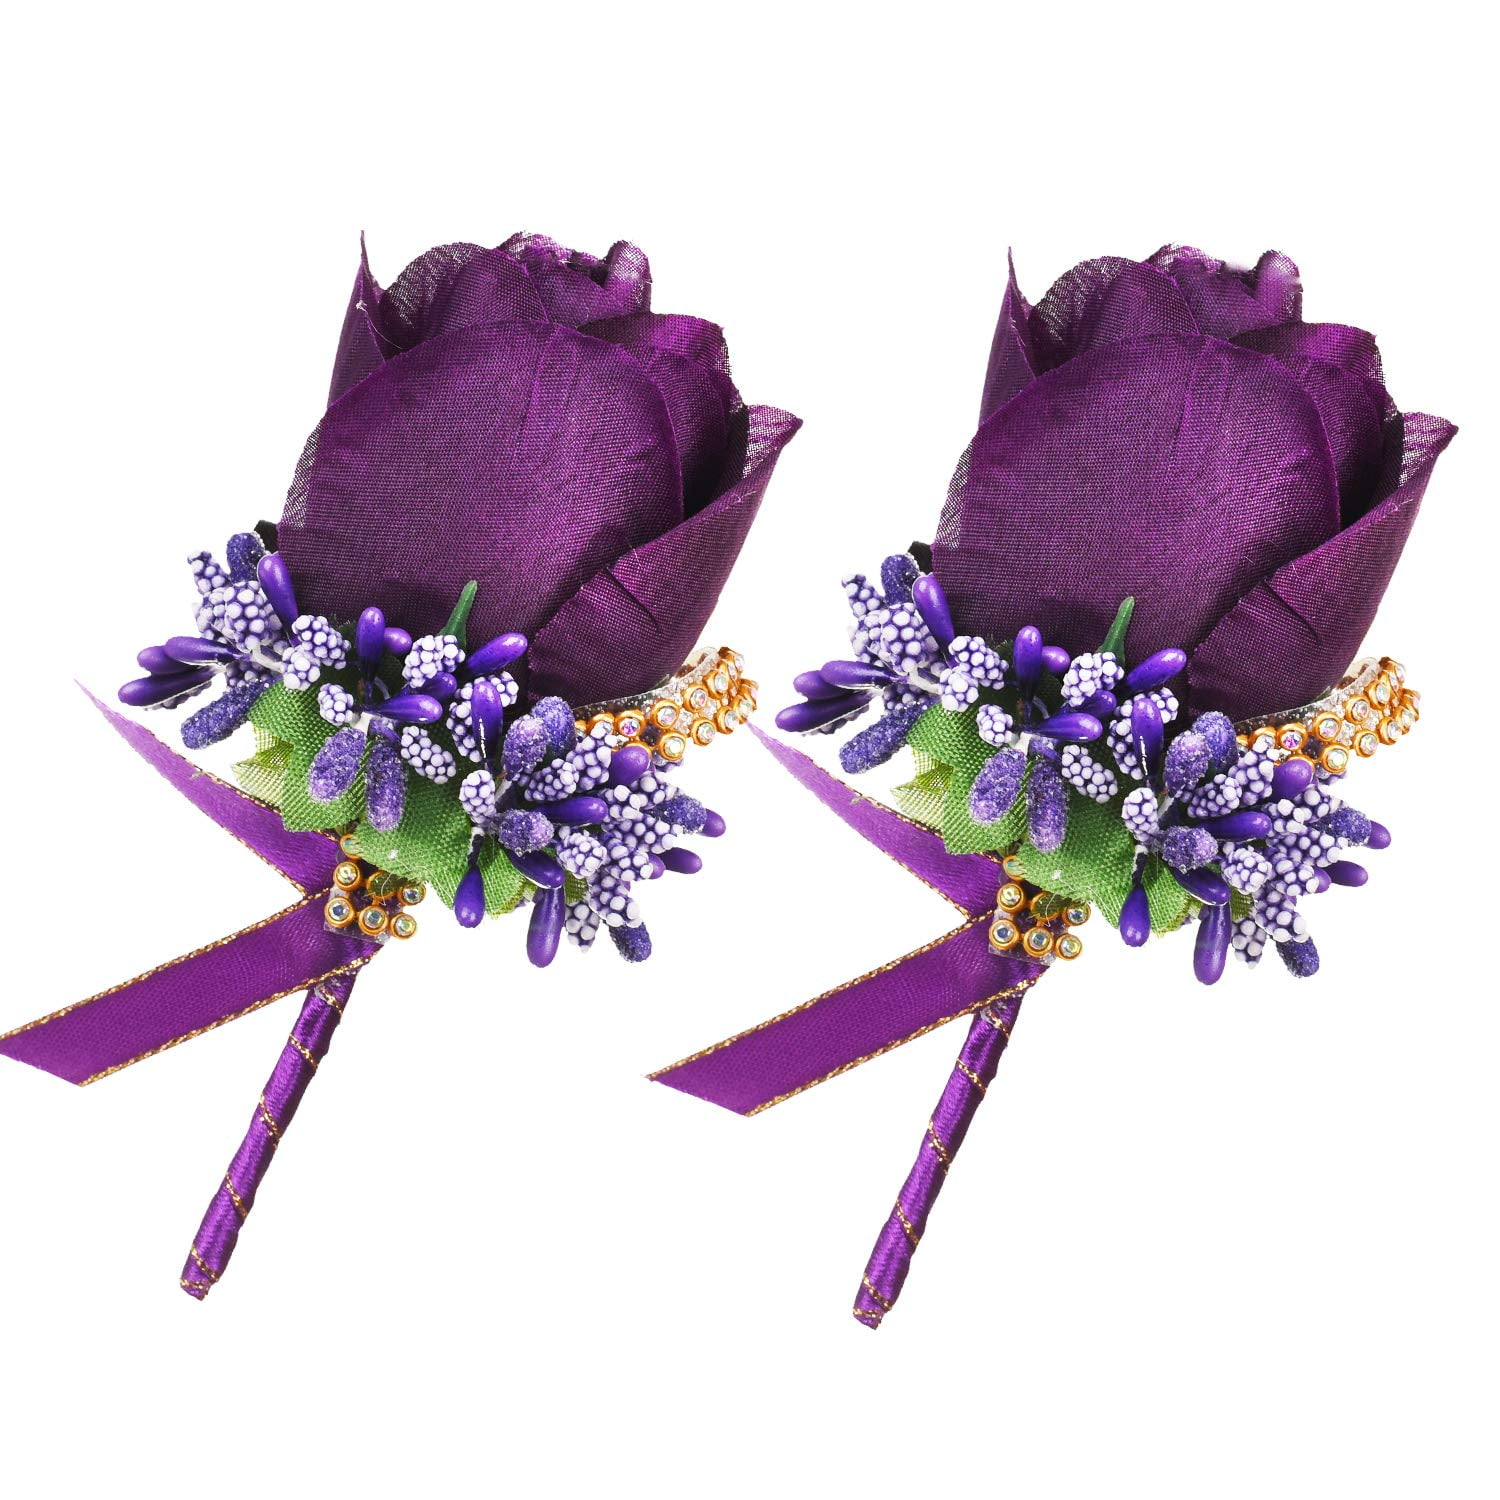 3 x Large Corsage Lavender Lilac Rose Wedding Flowers Buttonhole Mothers 